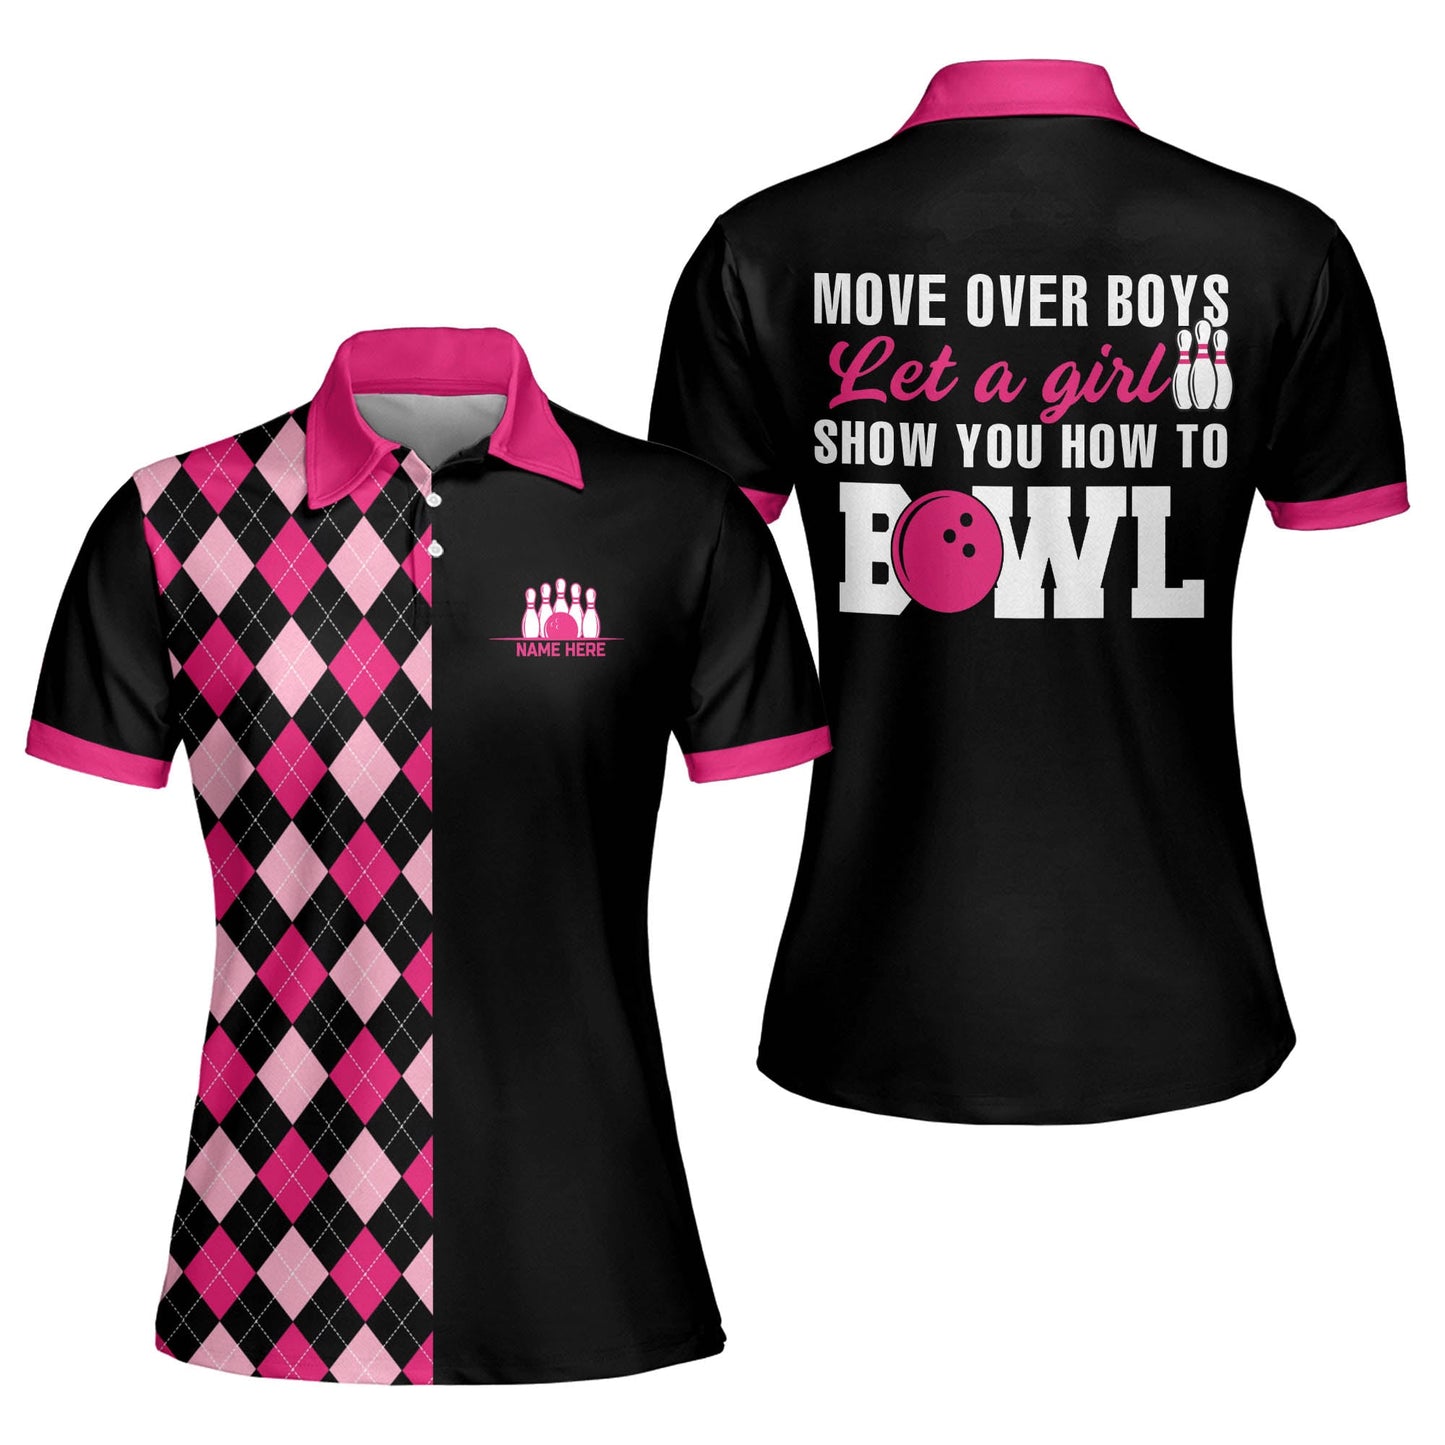 Custom Bowling Shirts For Women - Retro Womens Bowling Shirts - Funny Bowling Shirt Pattern Designs - Pink And Black Bowling Polo Shirts BW0067